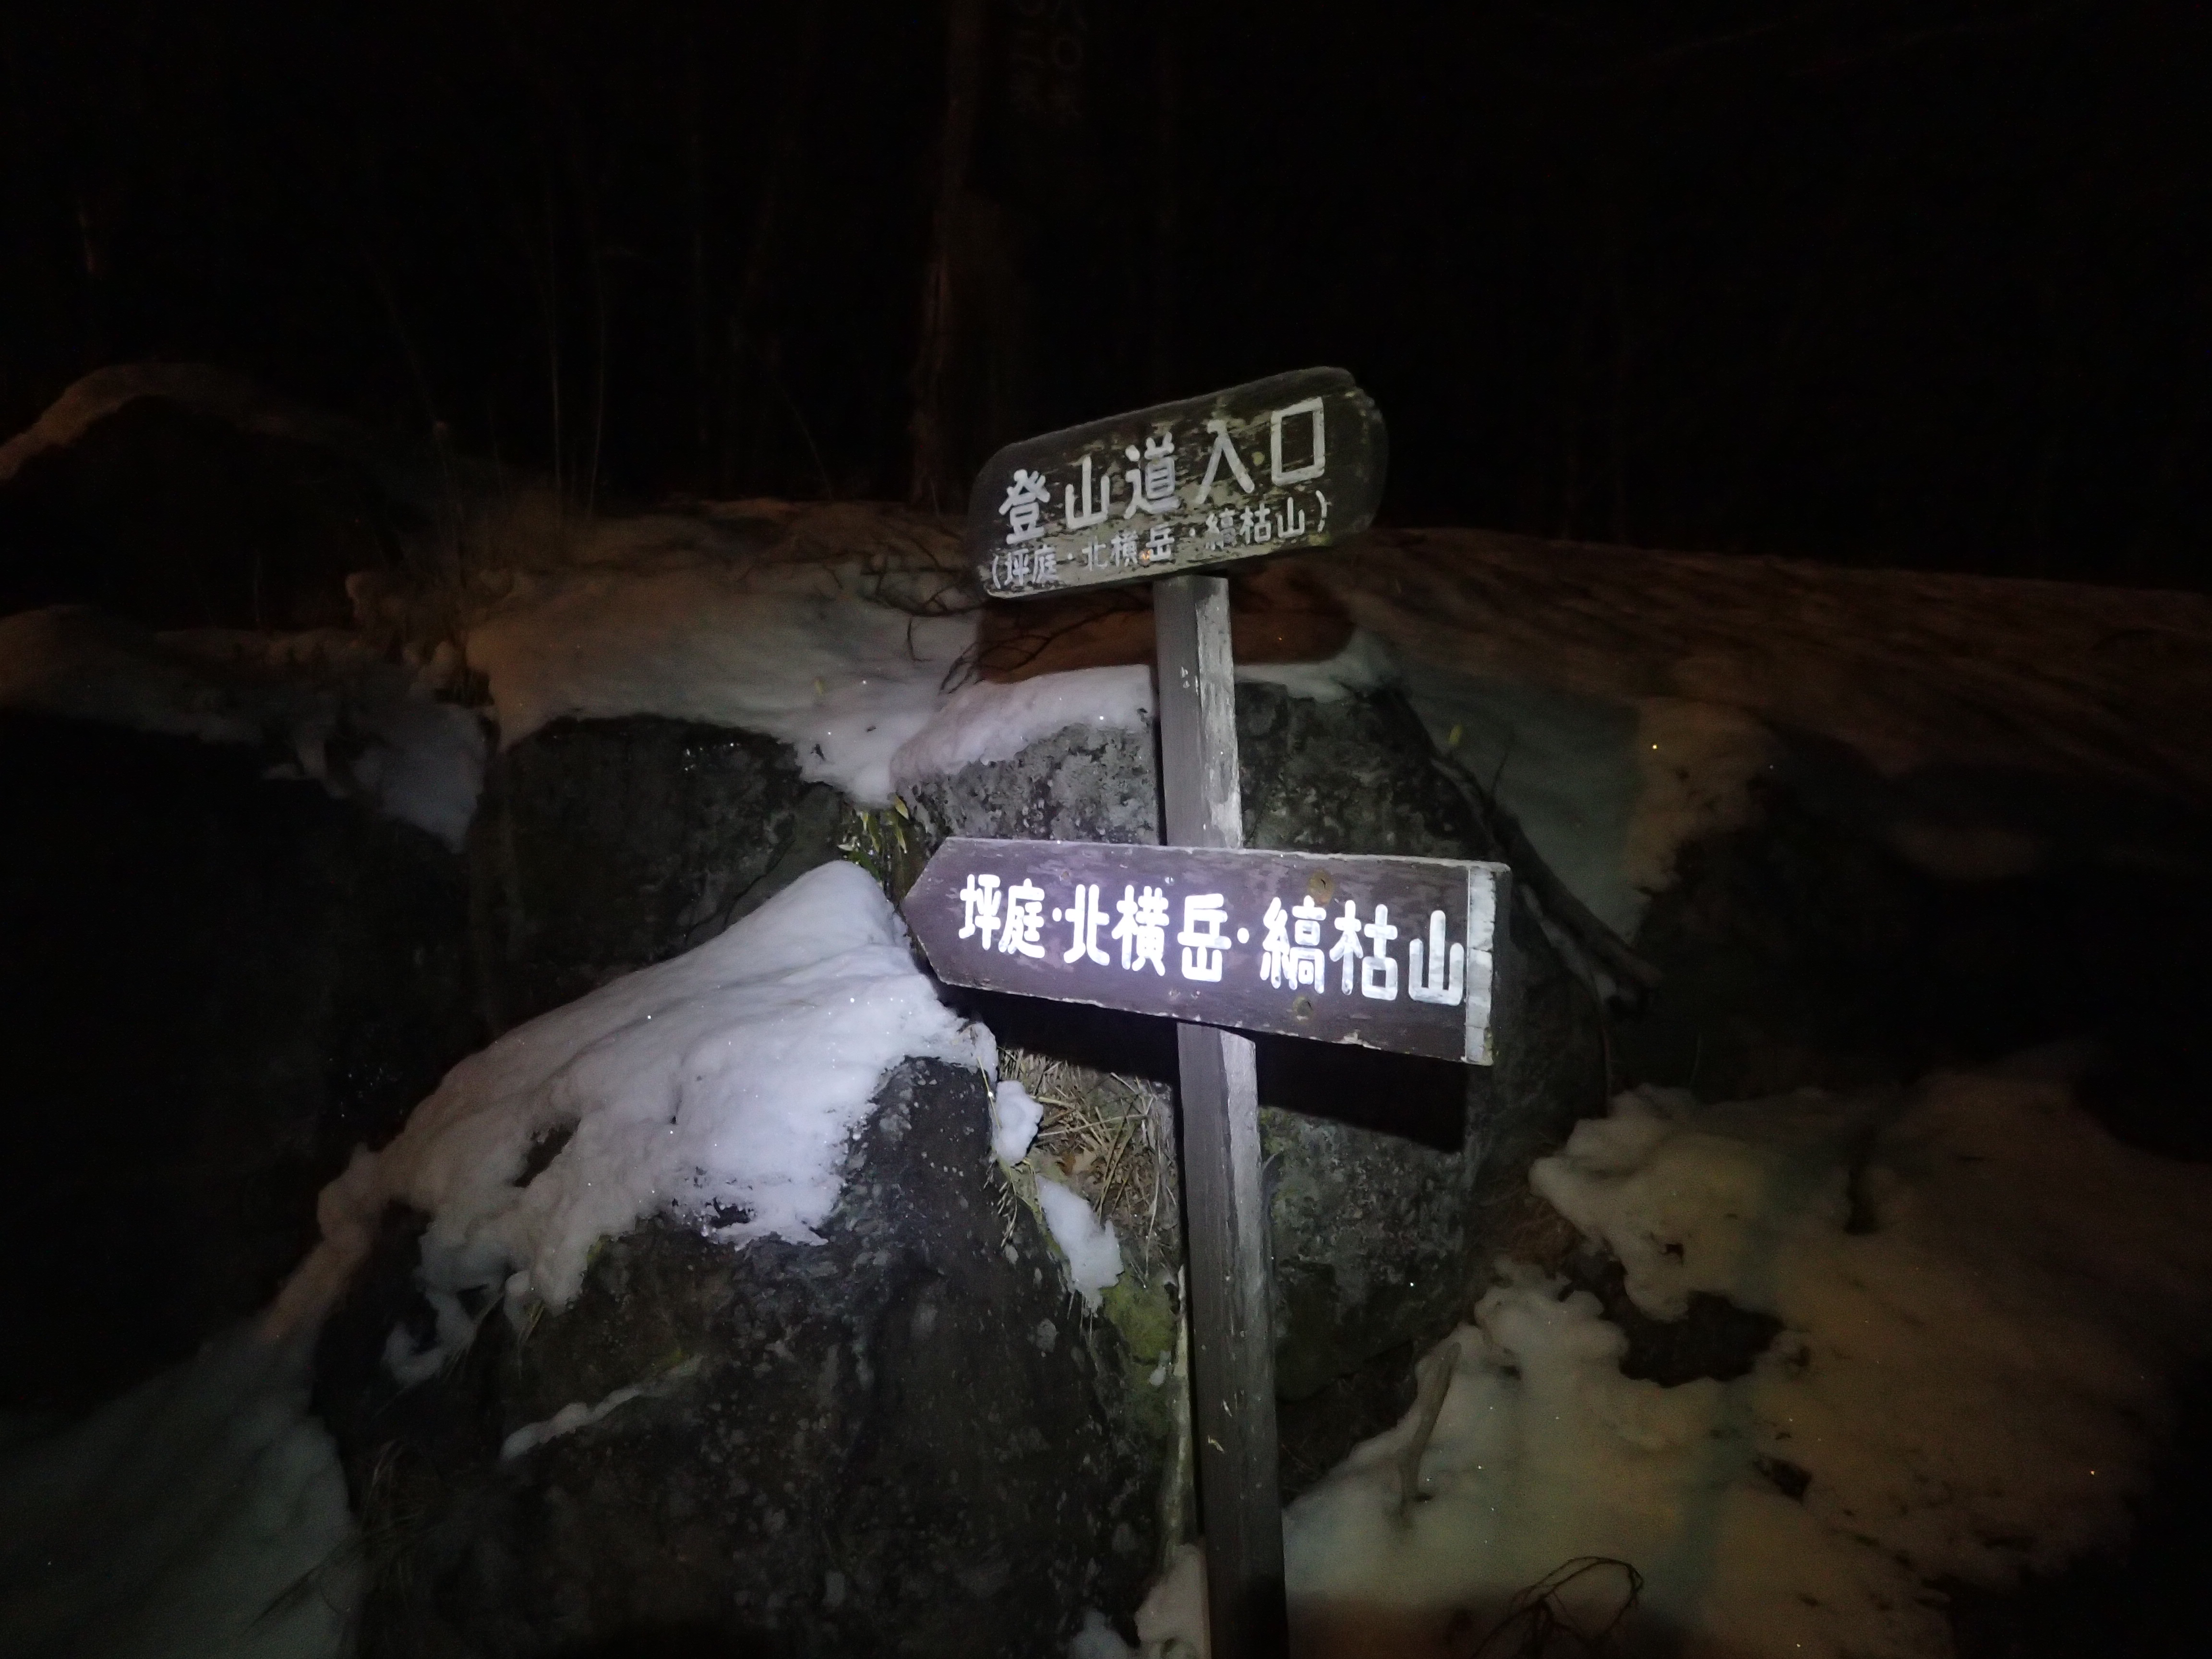 冬の北八ヶ岳登山 19年3月2日 縞枯山 茶臼山 麦草峠 白駒池 高見石 山旅の記録 Record Of Mountain Journey